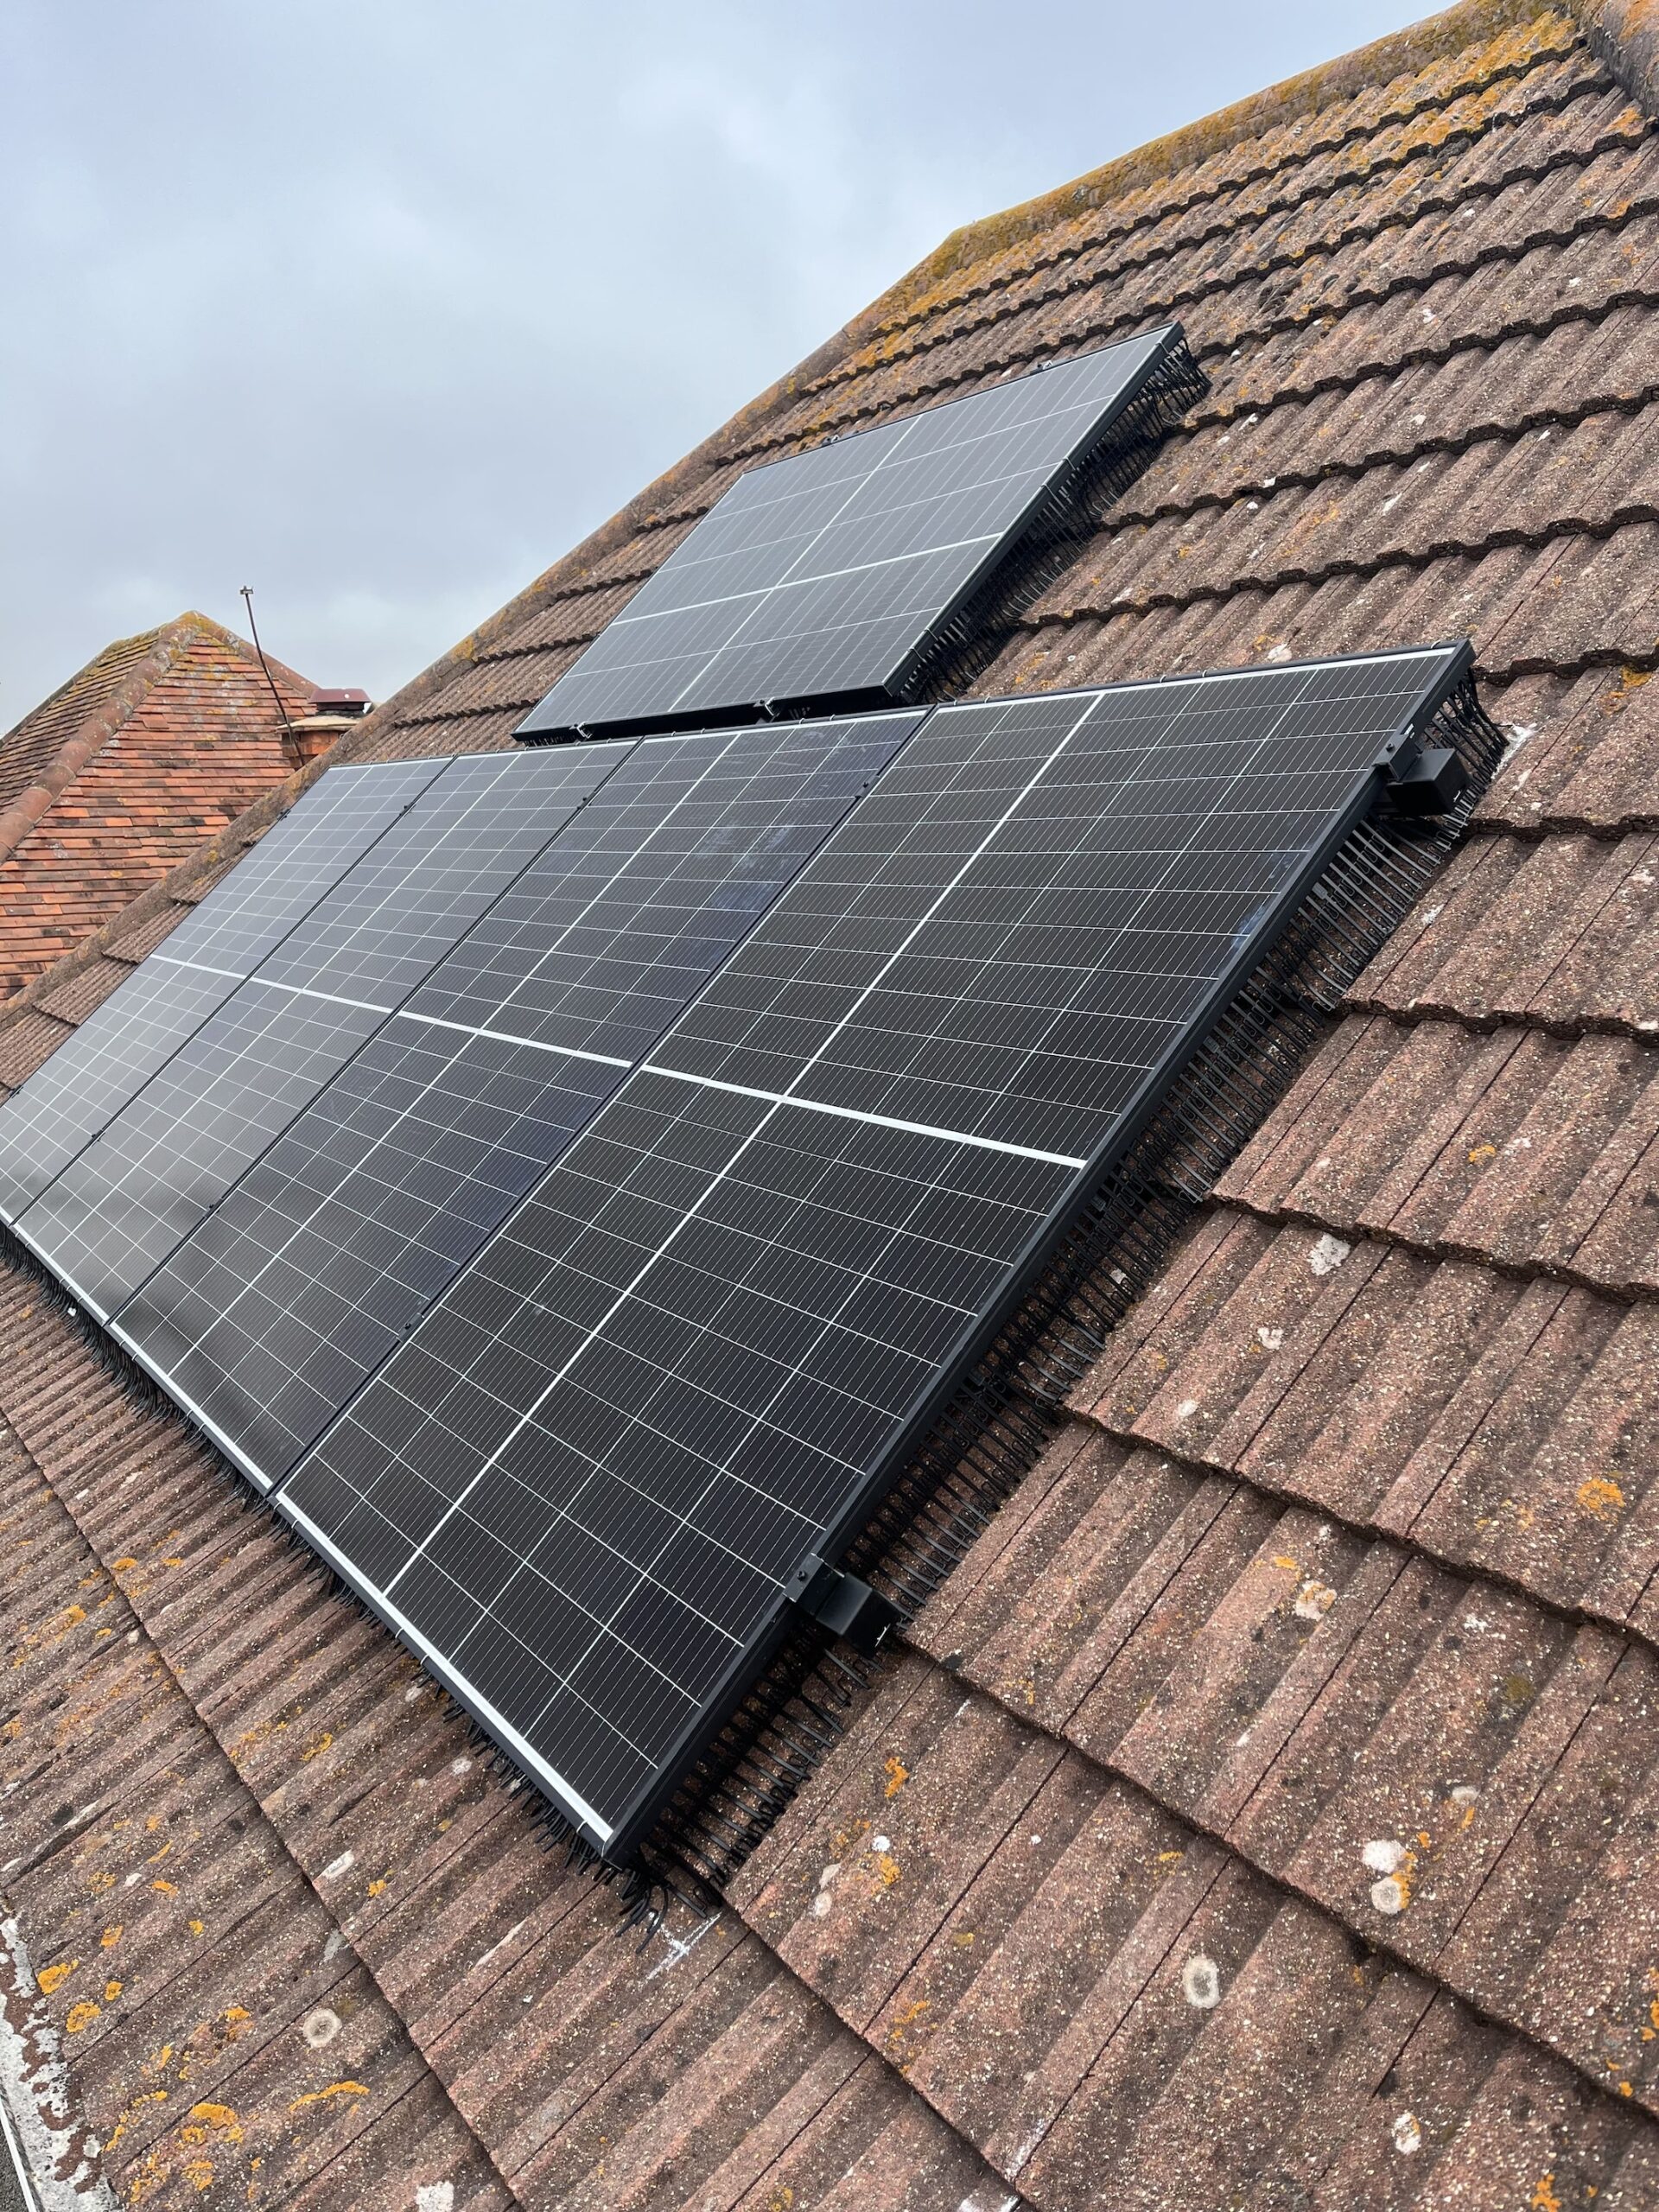 Solar panels on a customer’s roof